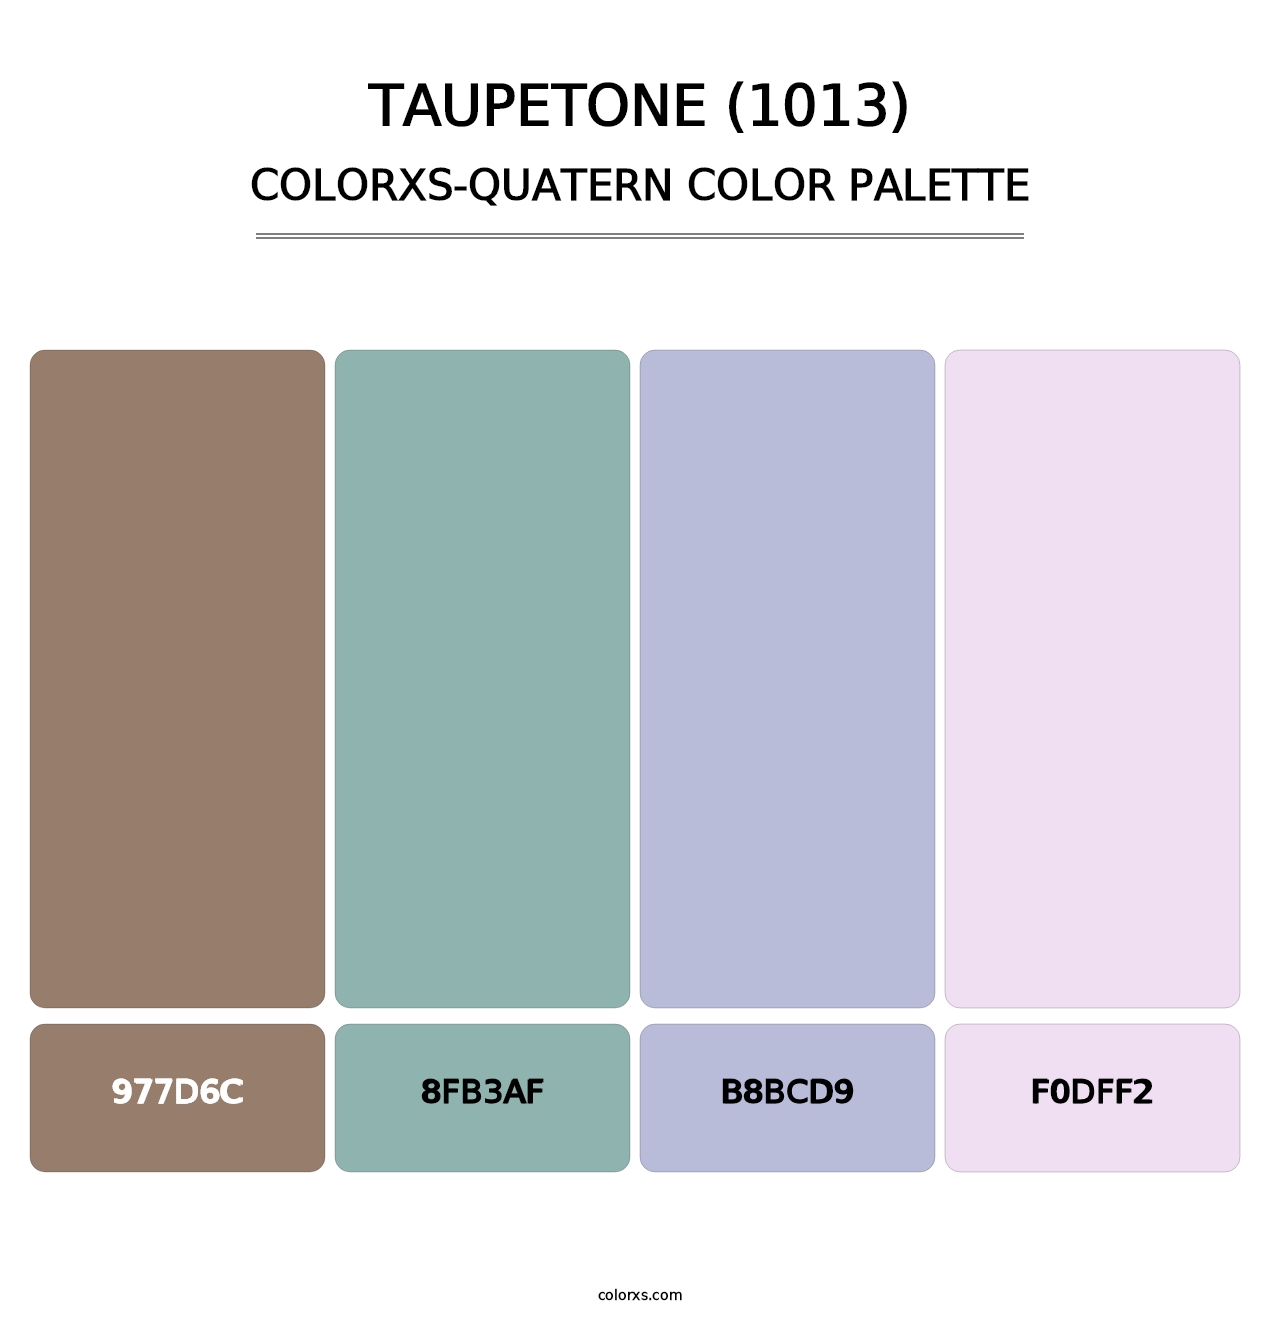 Taupetone (1013) - Colorxs Quatern Palette